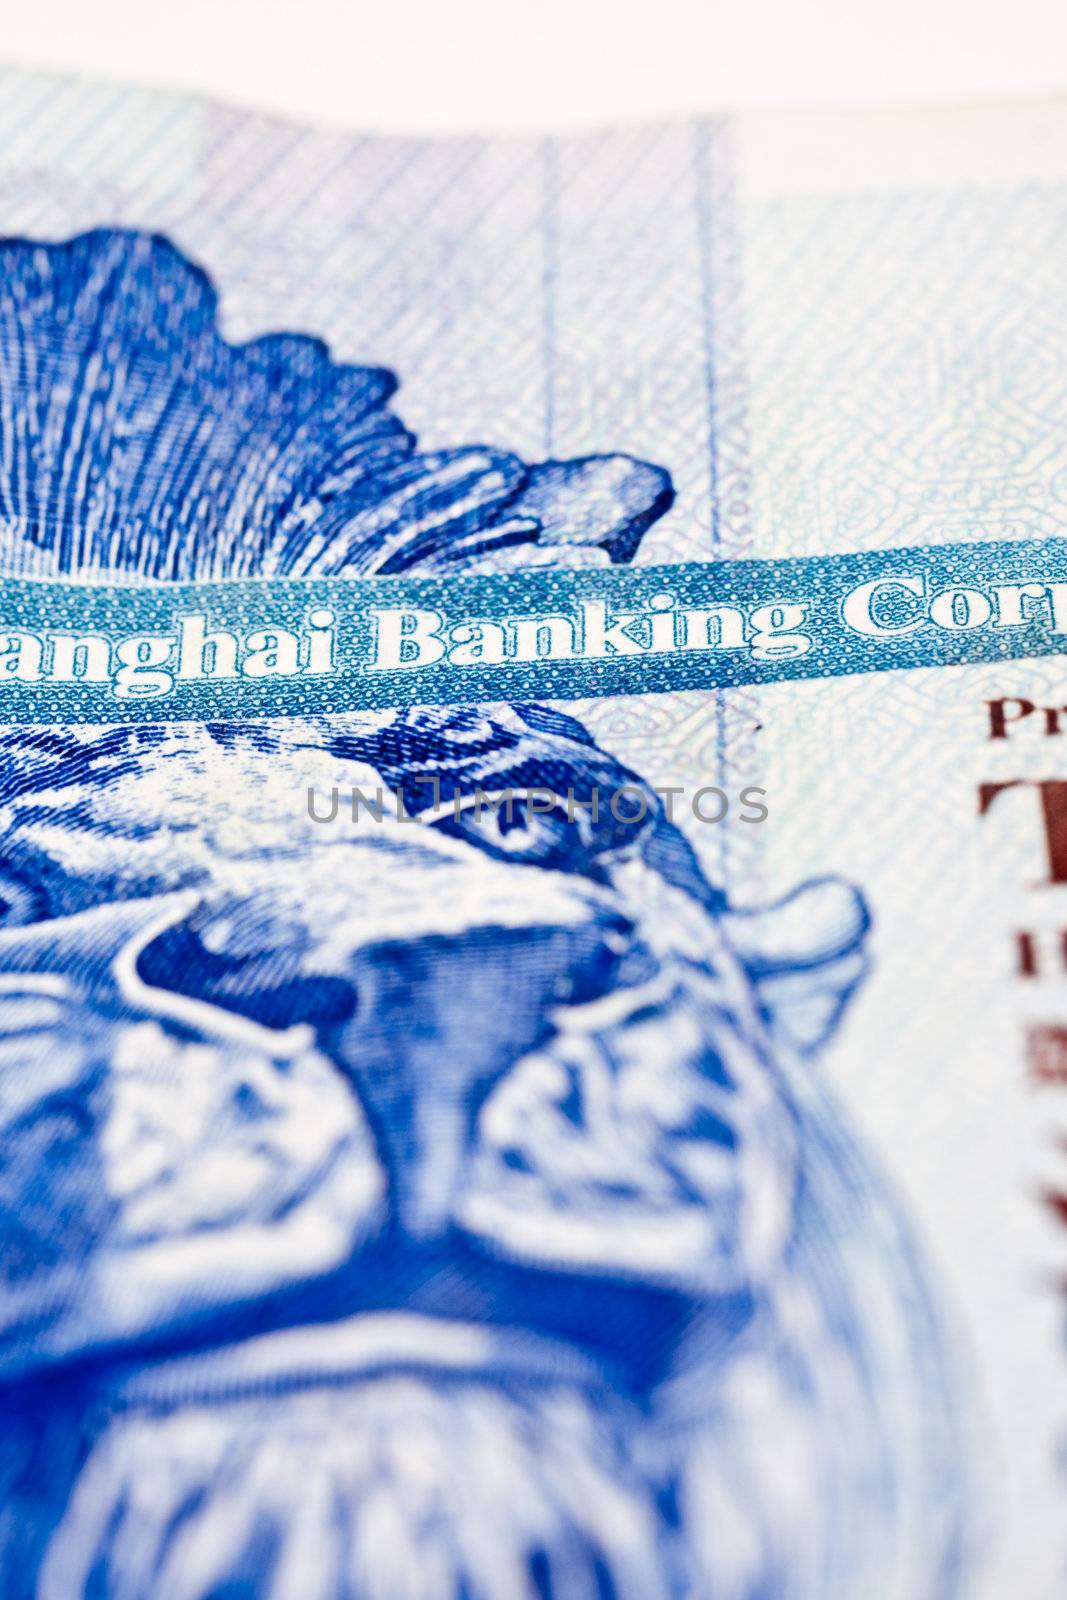 A close-up picture of a twenty Hong kong dollar banknote